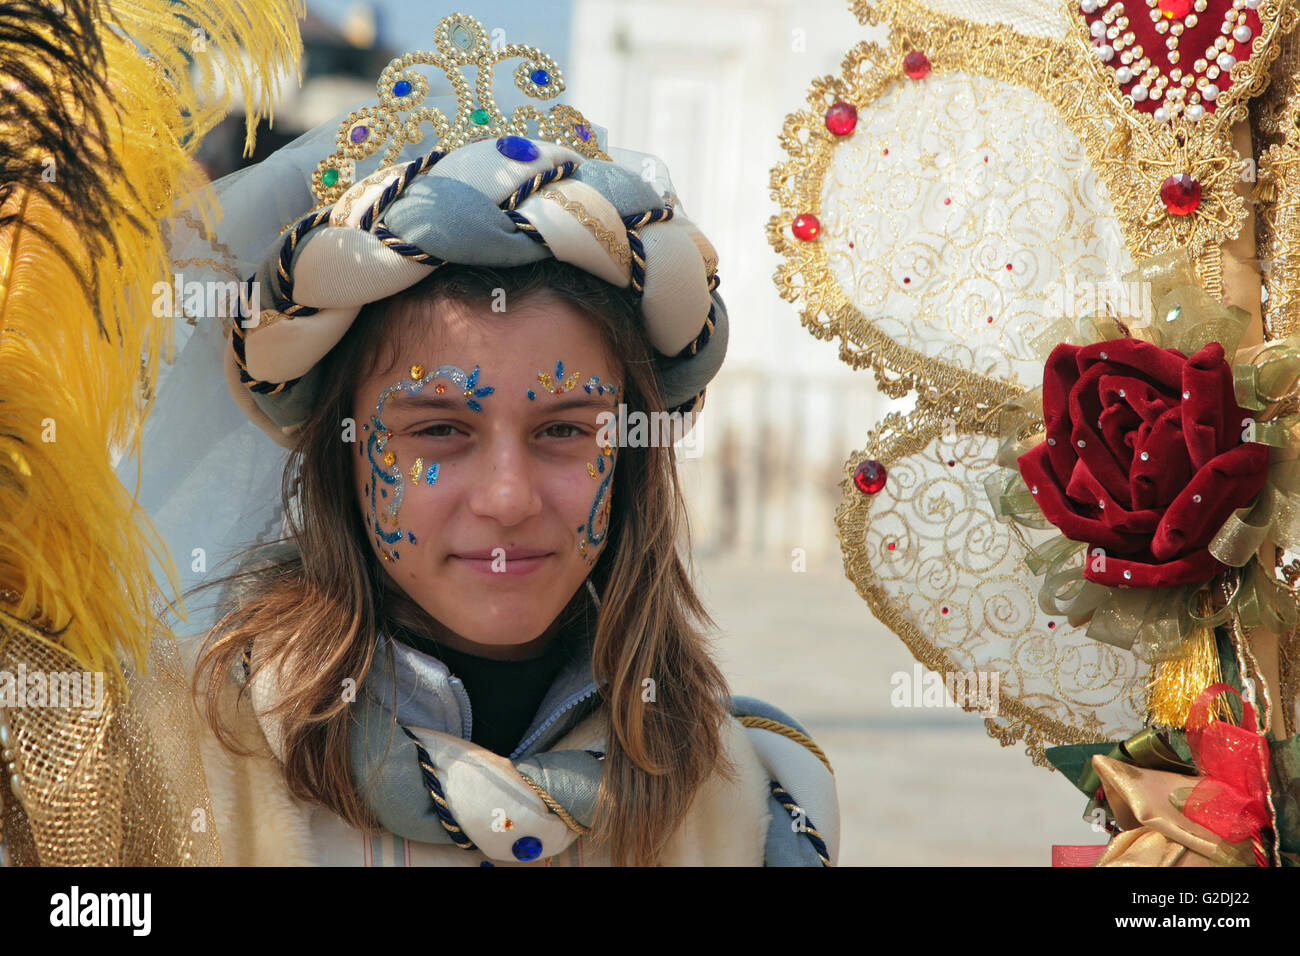 Fondamenta Zattere ai Gesuati, Dorsoduro, Venice, Italy: young carnevale reveller looks ravishing in her elaborate costume Stock Photo